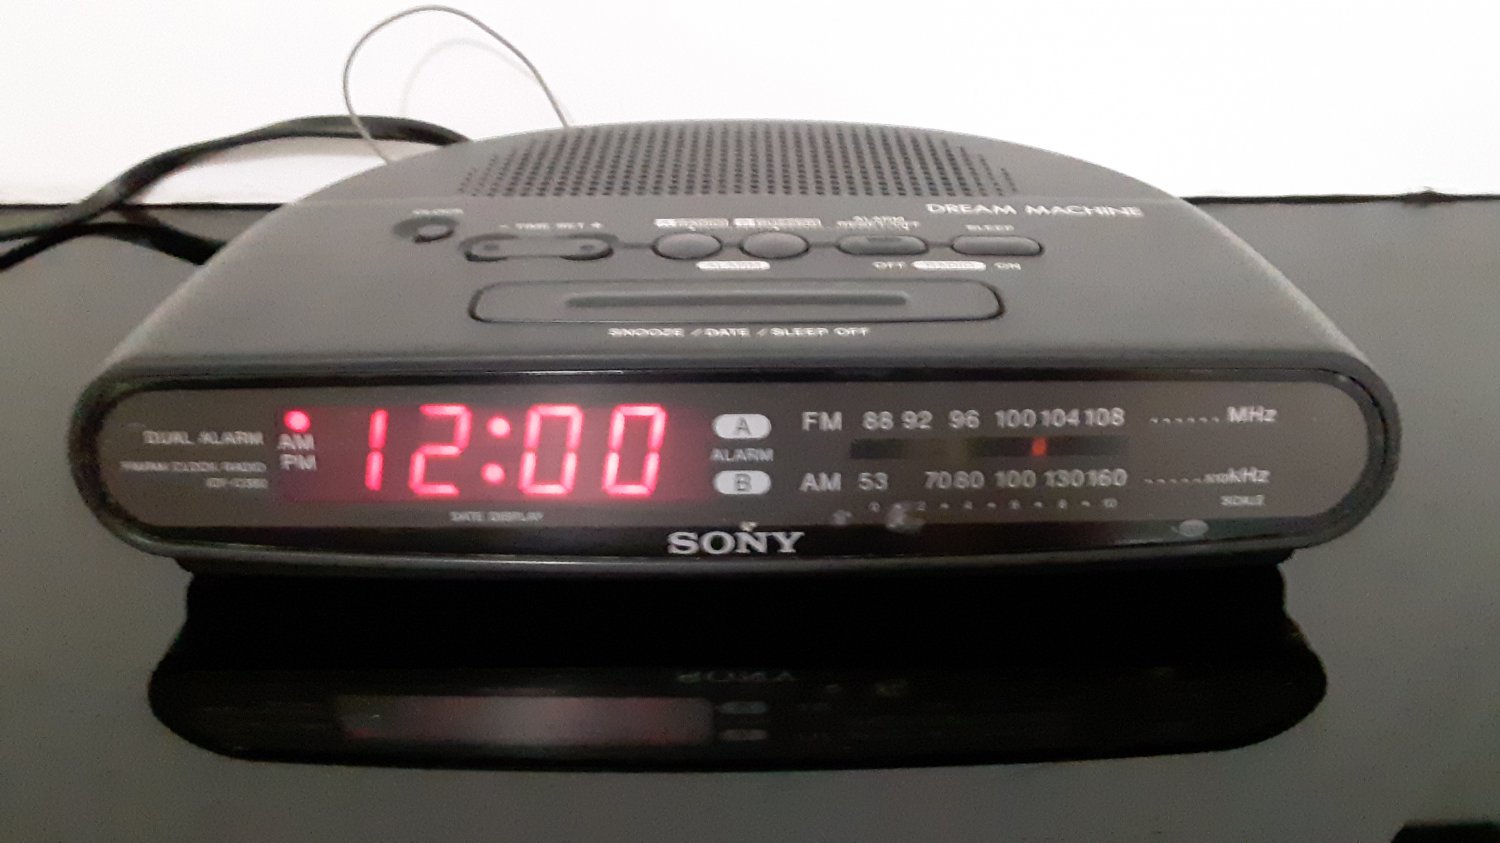 sony radio clock alarms